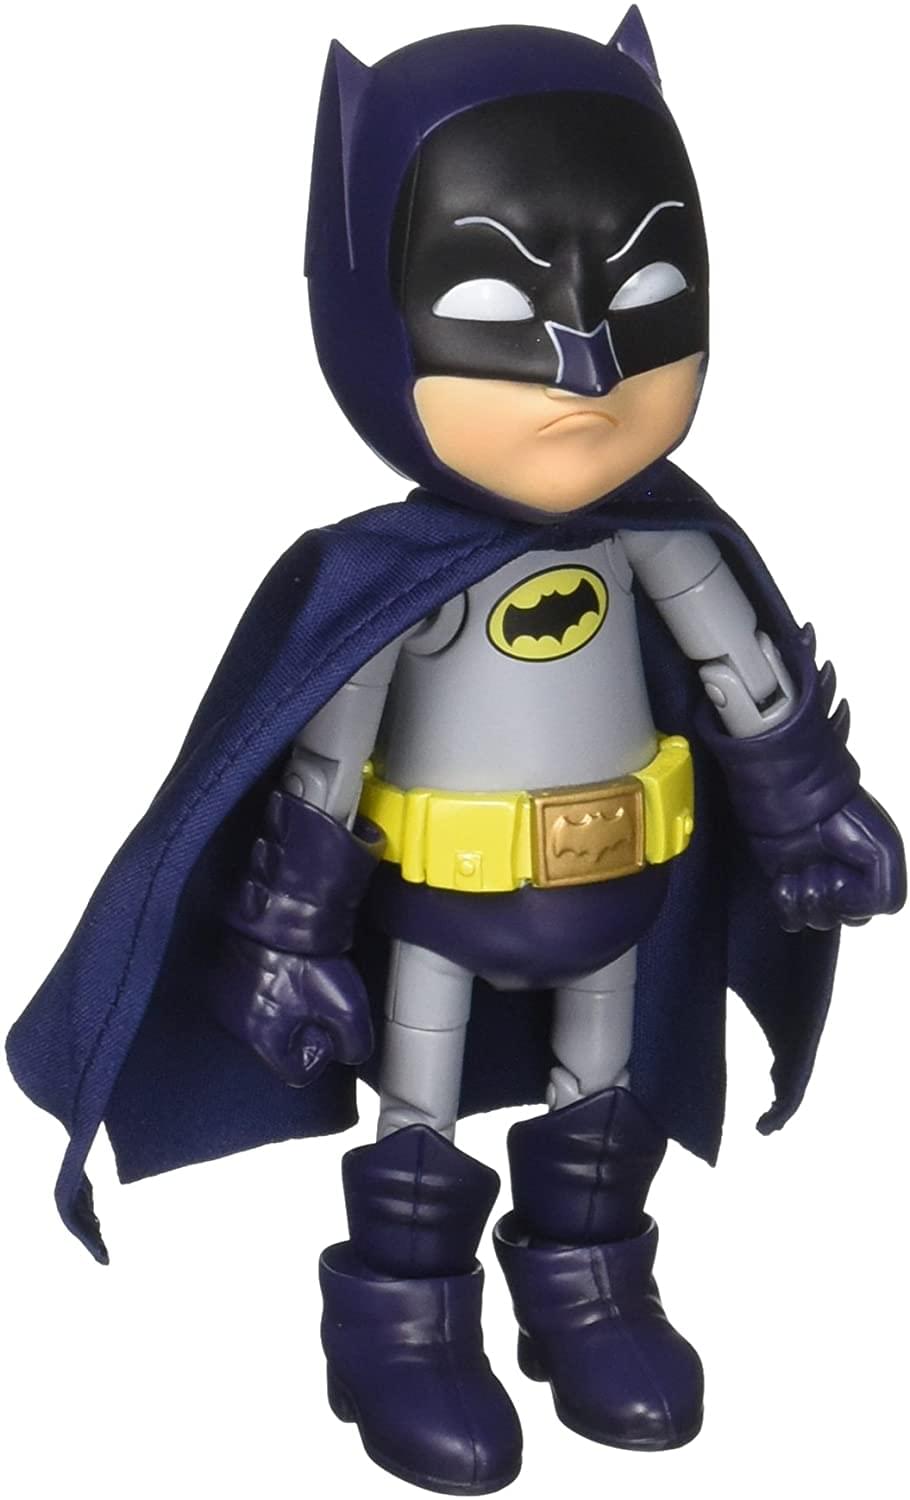 DC Comics Hybrid Metal Figuration Action Figure , 1966 Batman